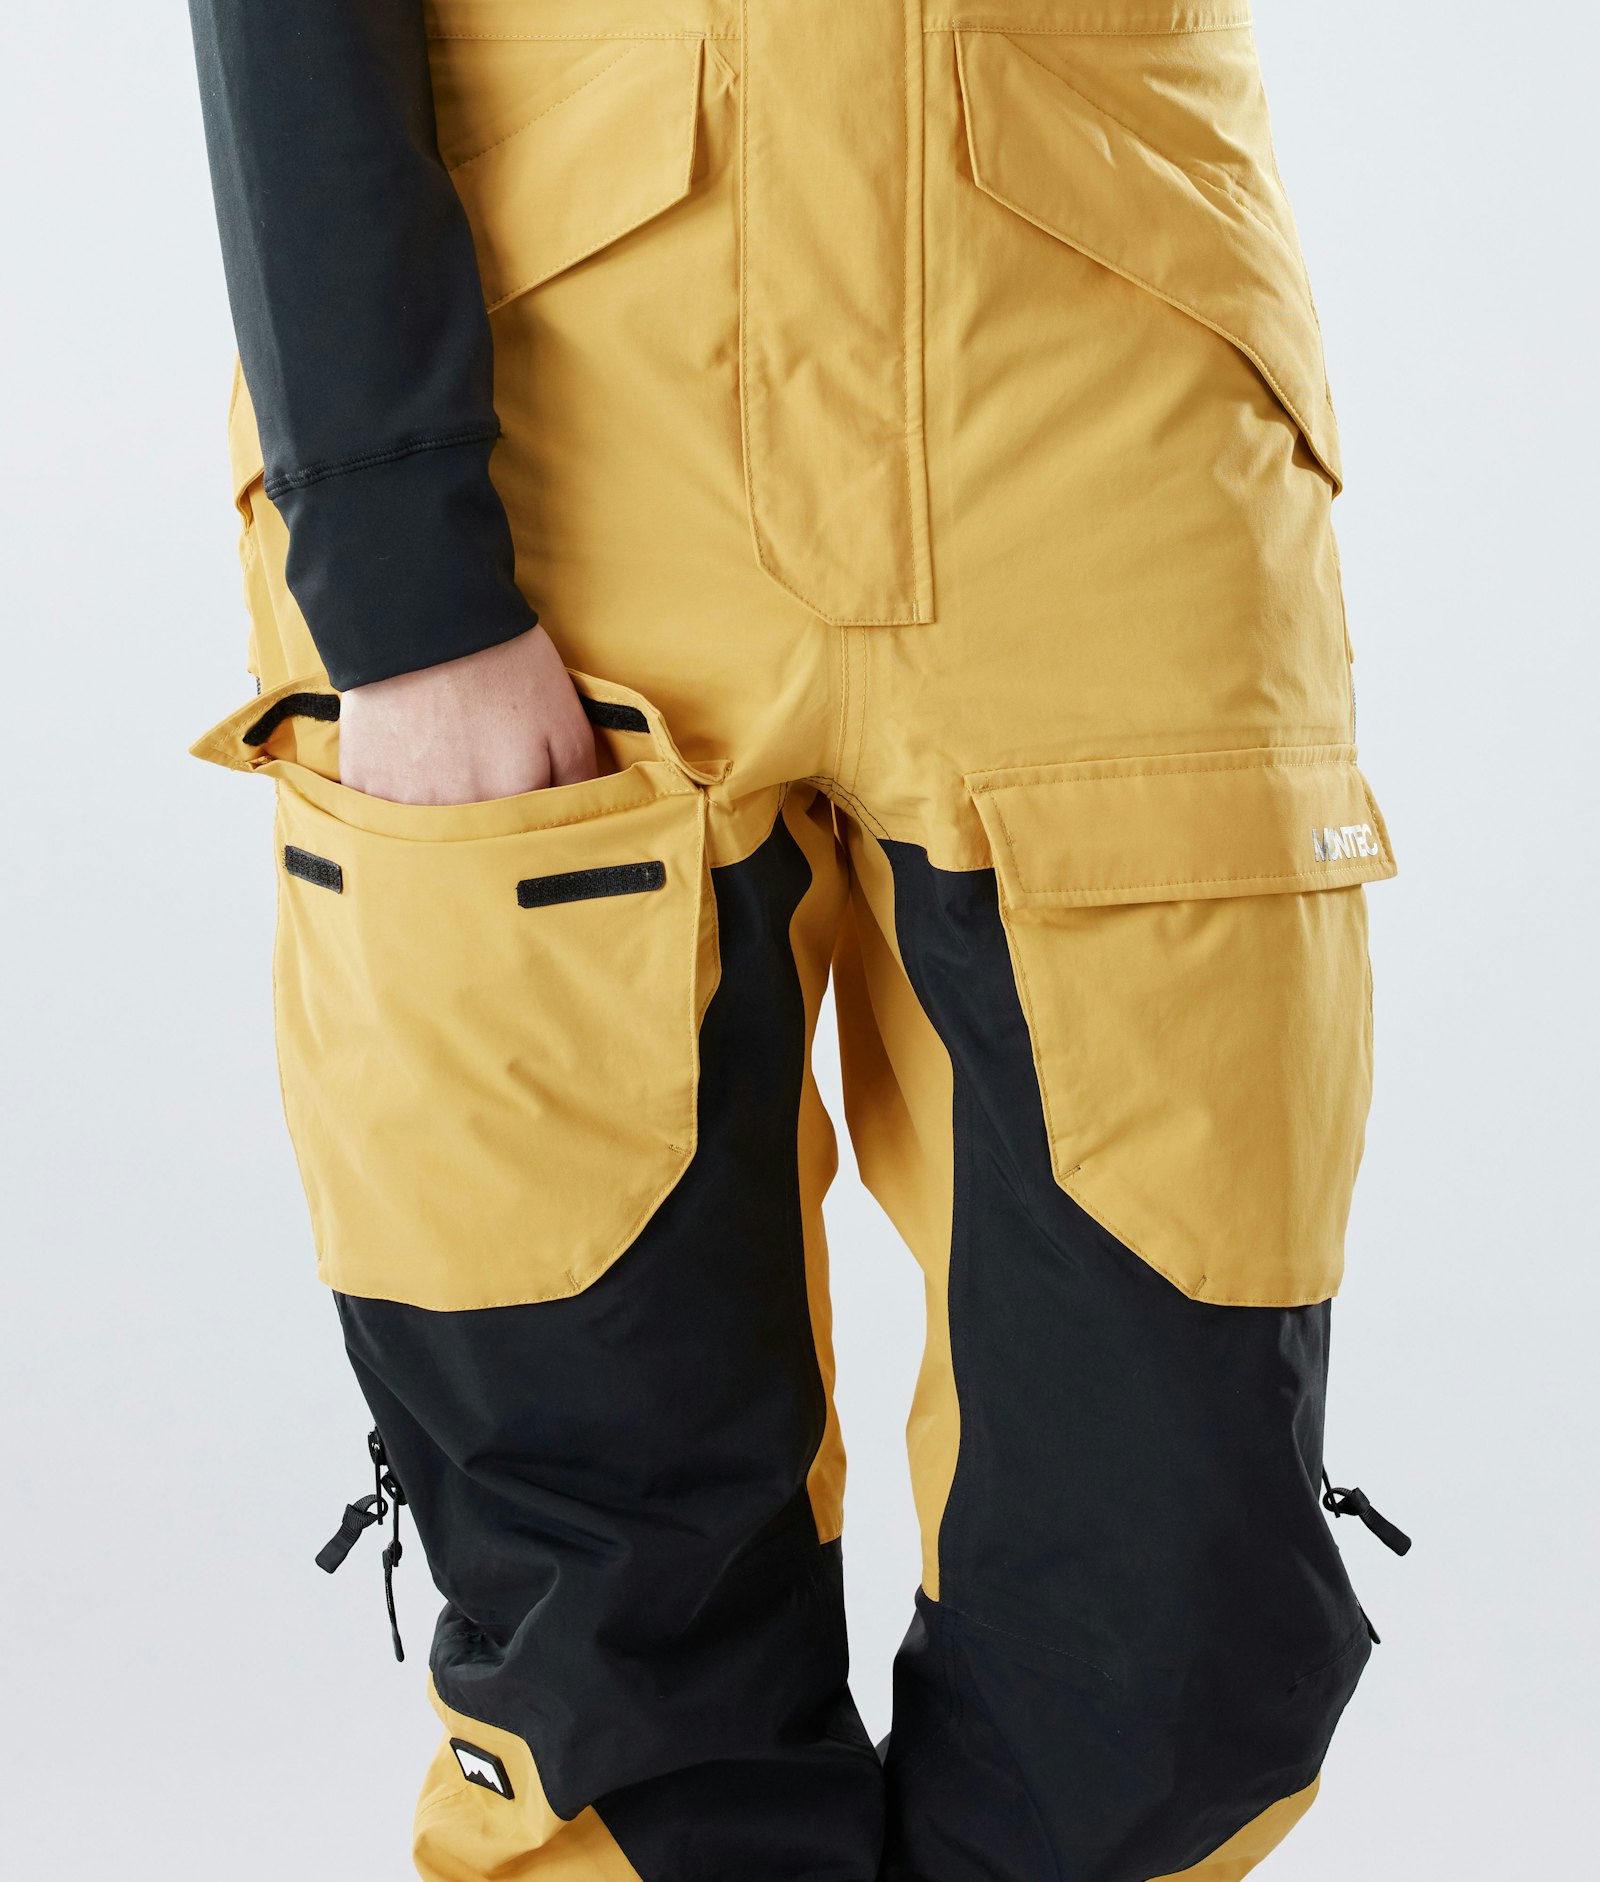 Fawk W 2020 Snowboardhose Damen Yellow/Black